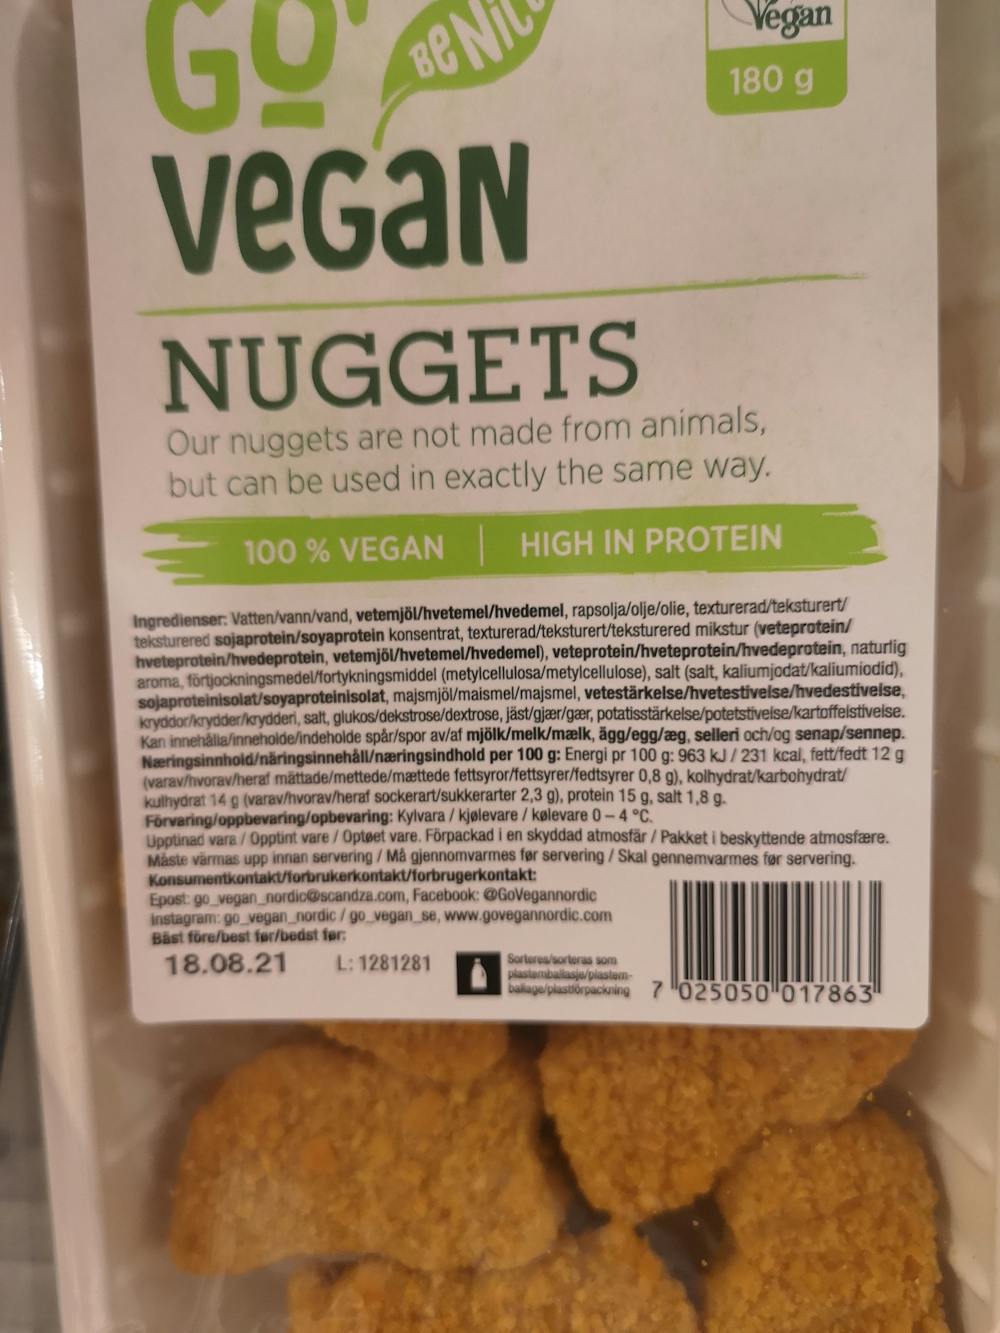 Ingredienslisten til Nuggets, Go' vegan